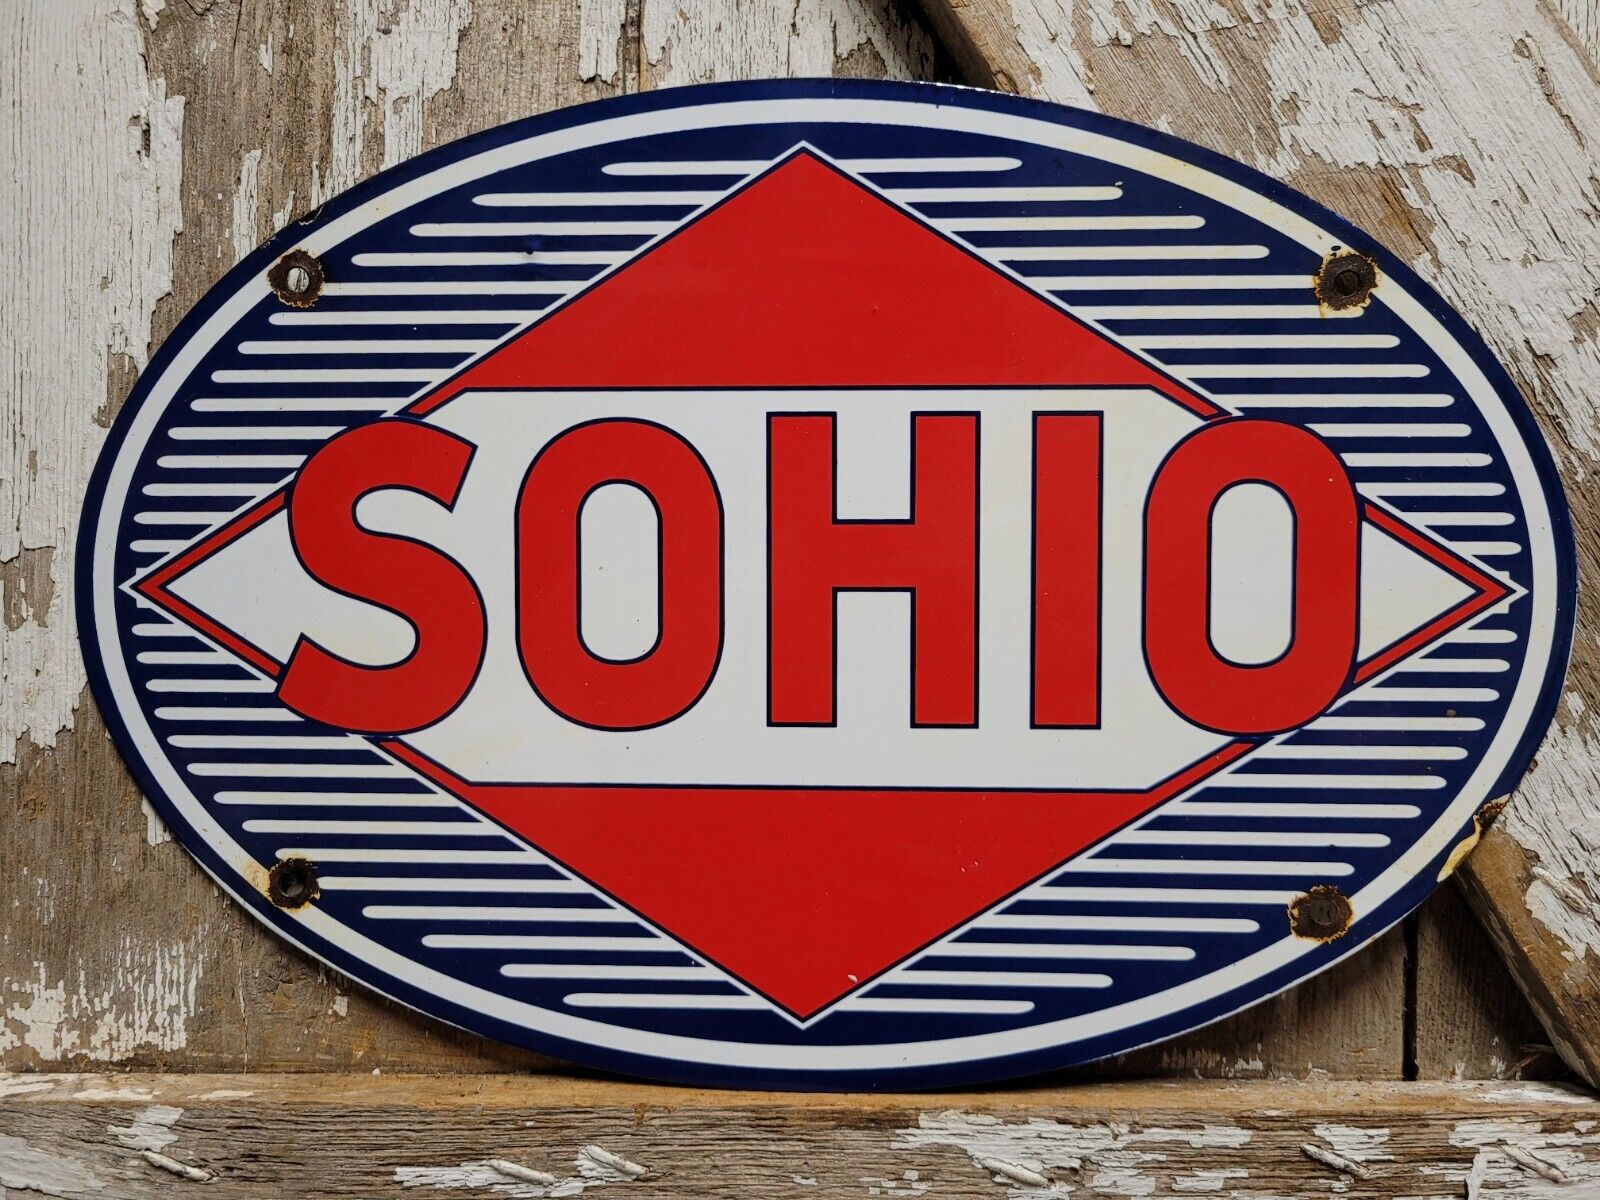 VINTAGE SOHIO PORCELAIN SIGN STANDARD OIL OHIO GAS OIL SERVICE UTILITIES OVAL